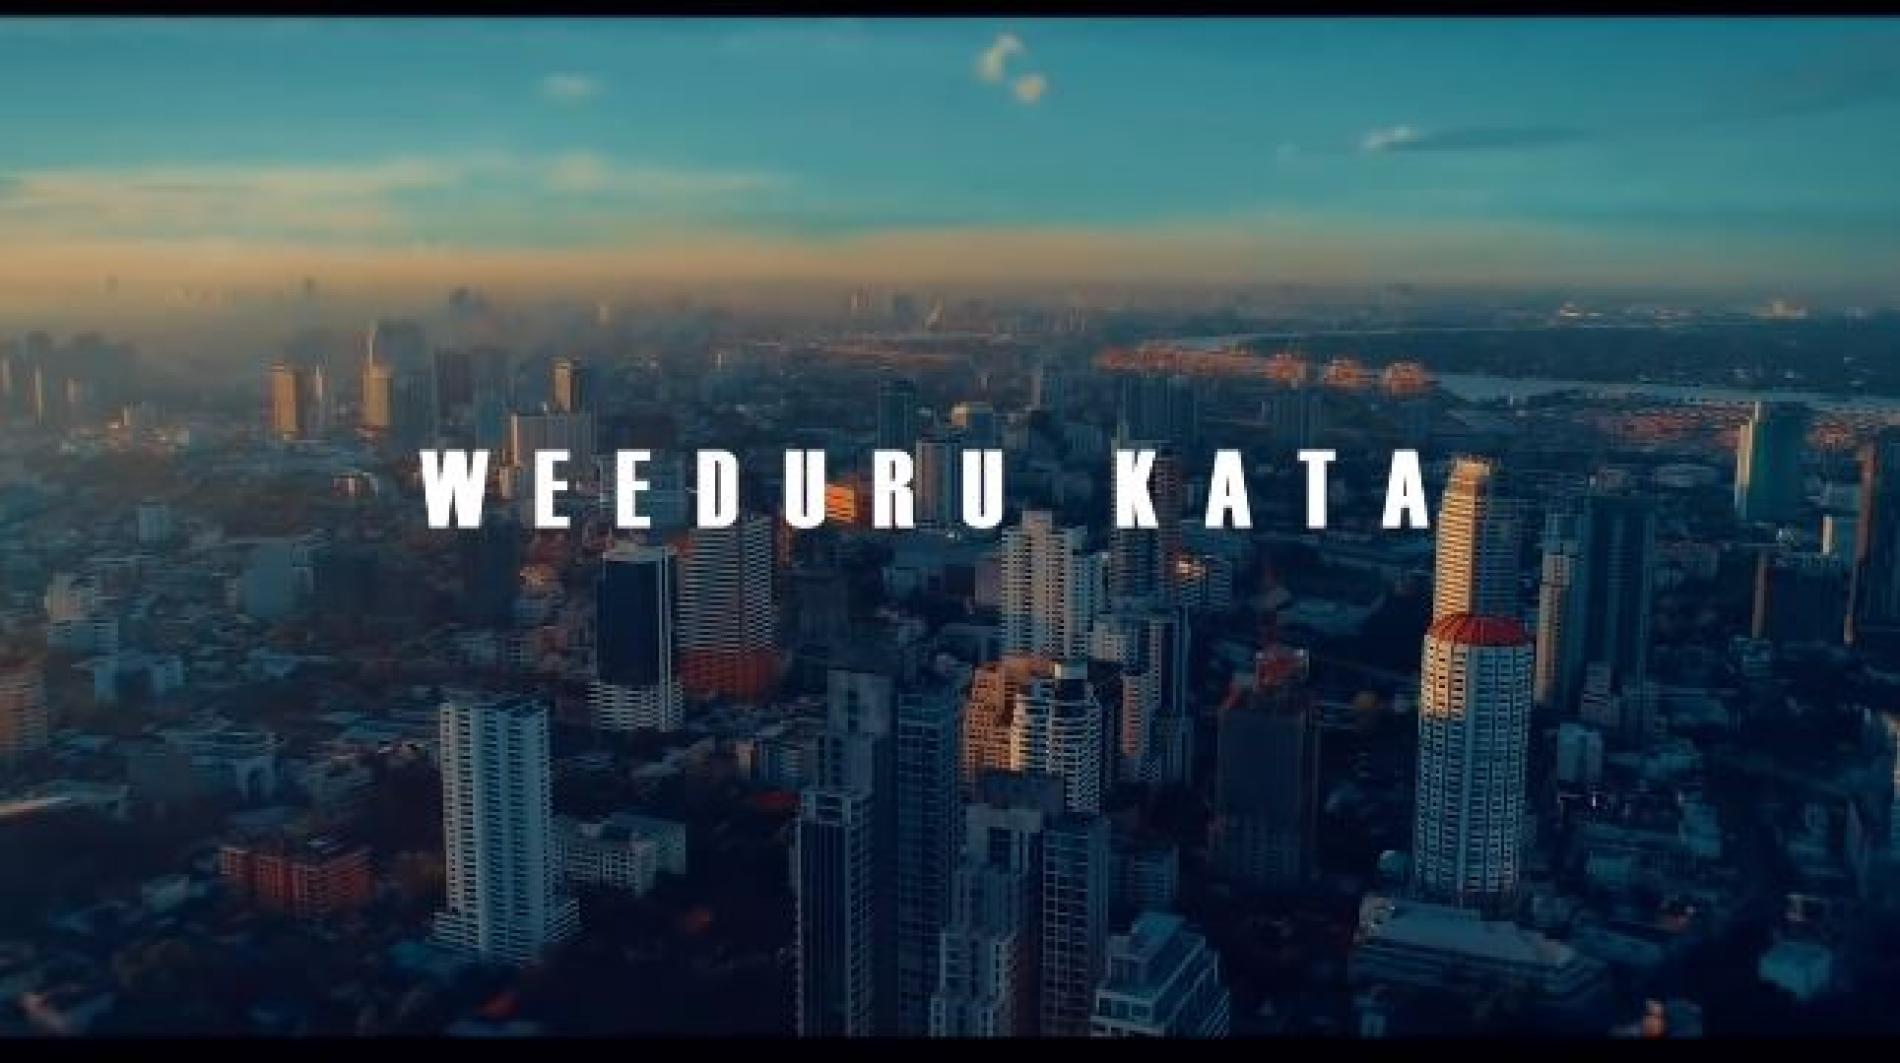 New Music : Weeduru Kata (වීදුරු කැට) Sajith Madusanka ft Shehan & Shanuka, Jadon Fonka (Official Music Video)